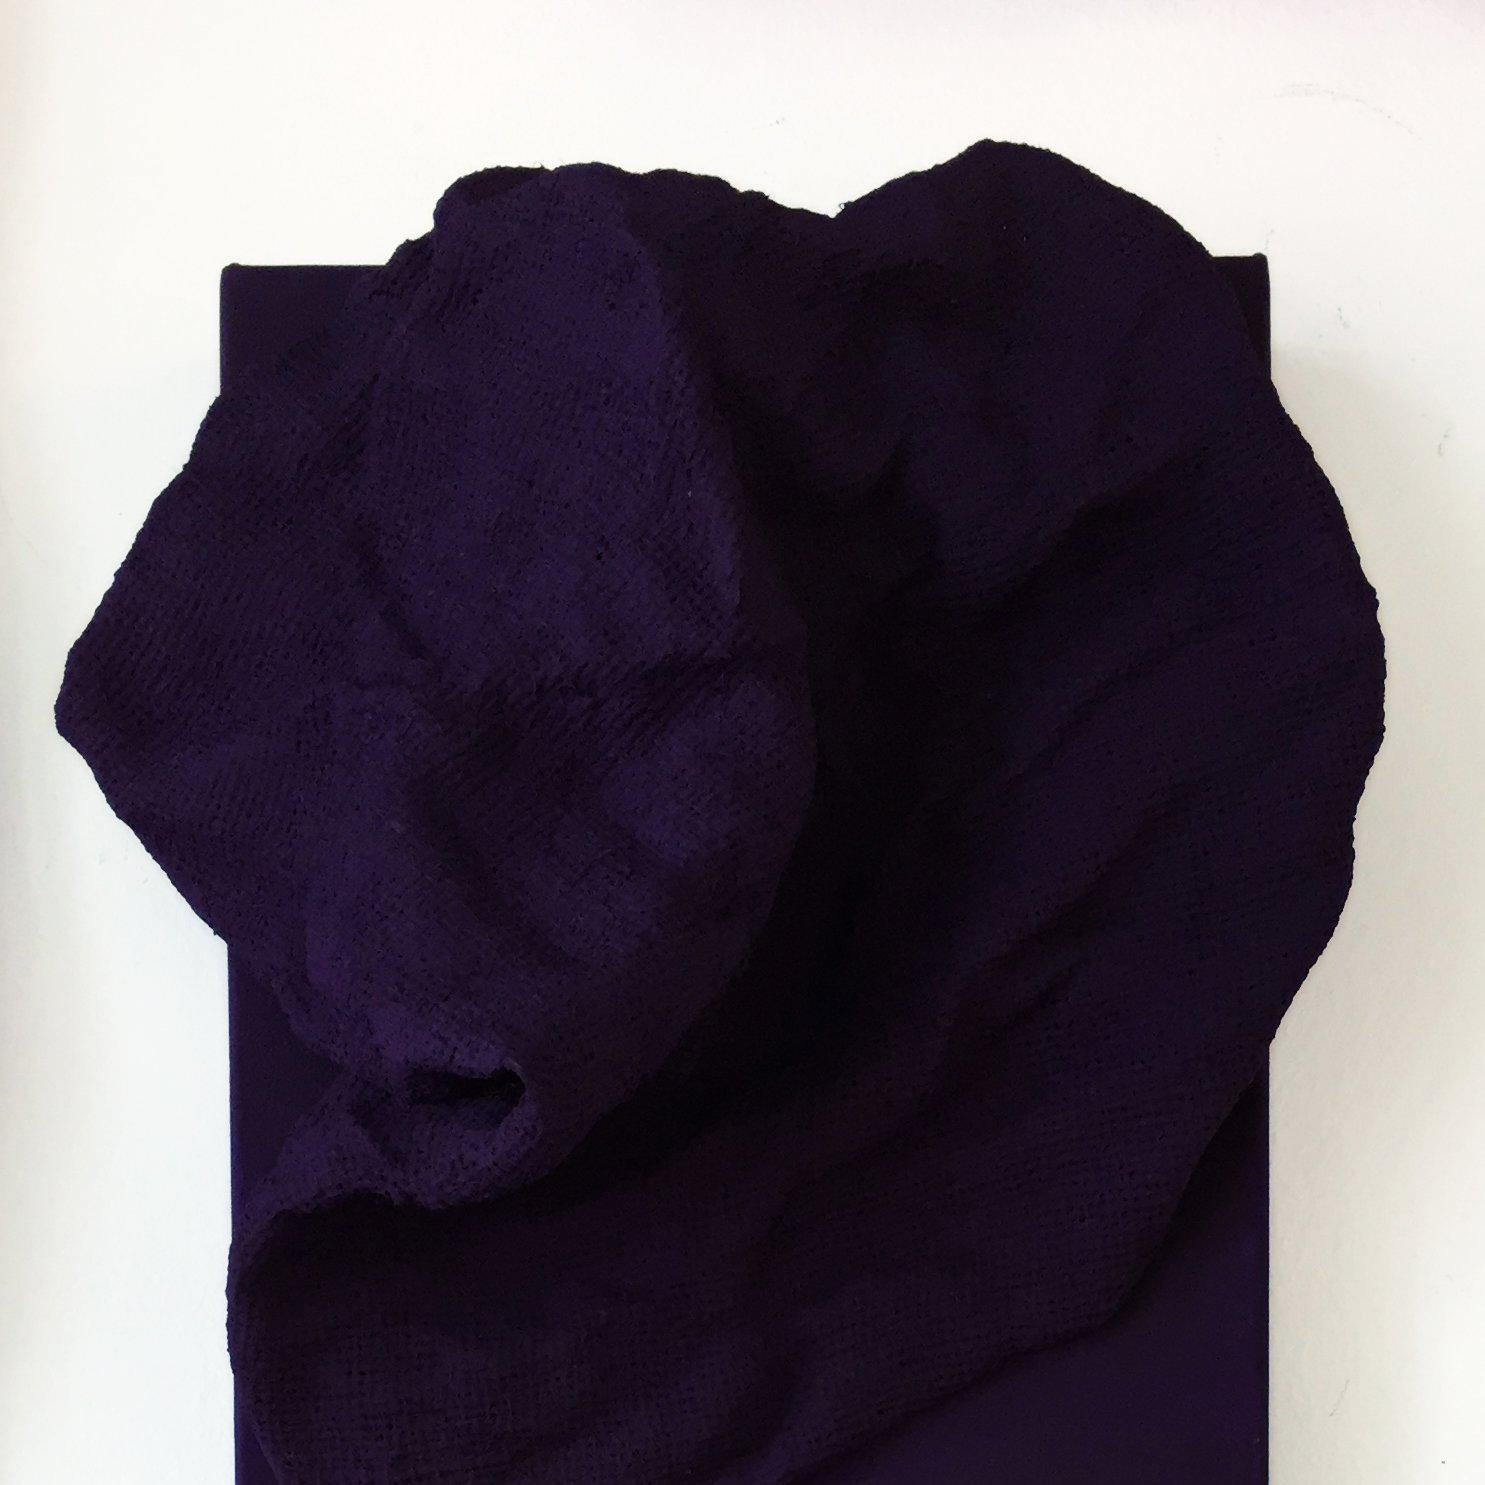 Egyptian Violet Folds - Pair (folds, dark art, fabric, textile arts, wall mount) - Sculpture by Chloe Hedden